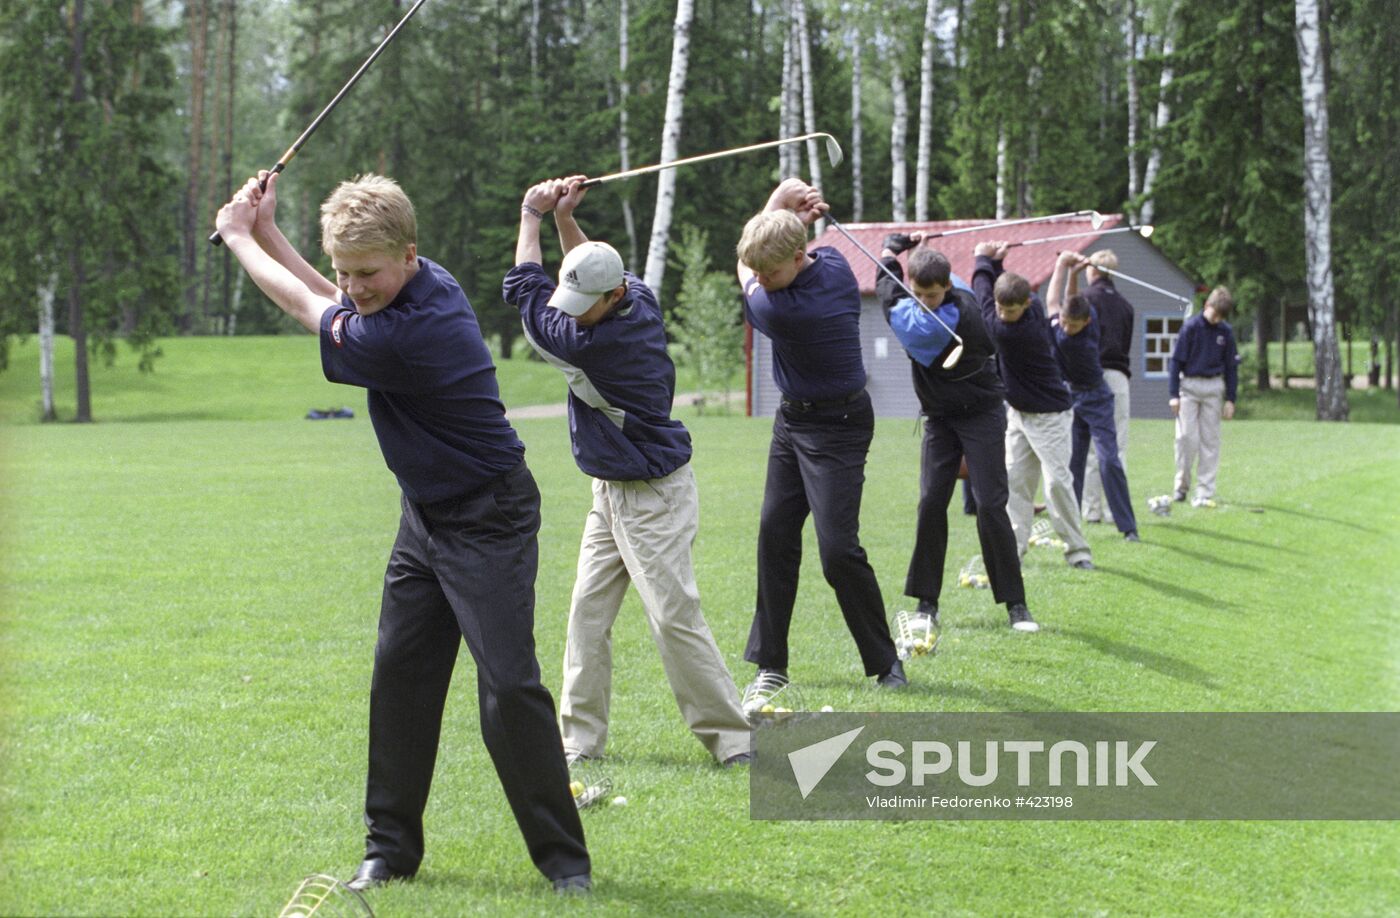 Members of Junior Golf Academy